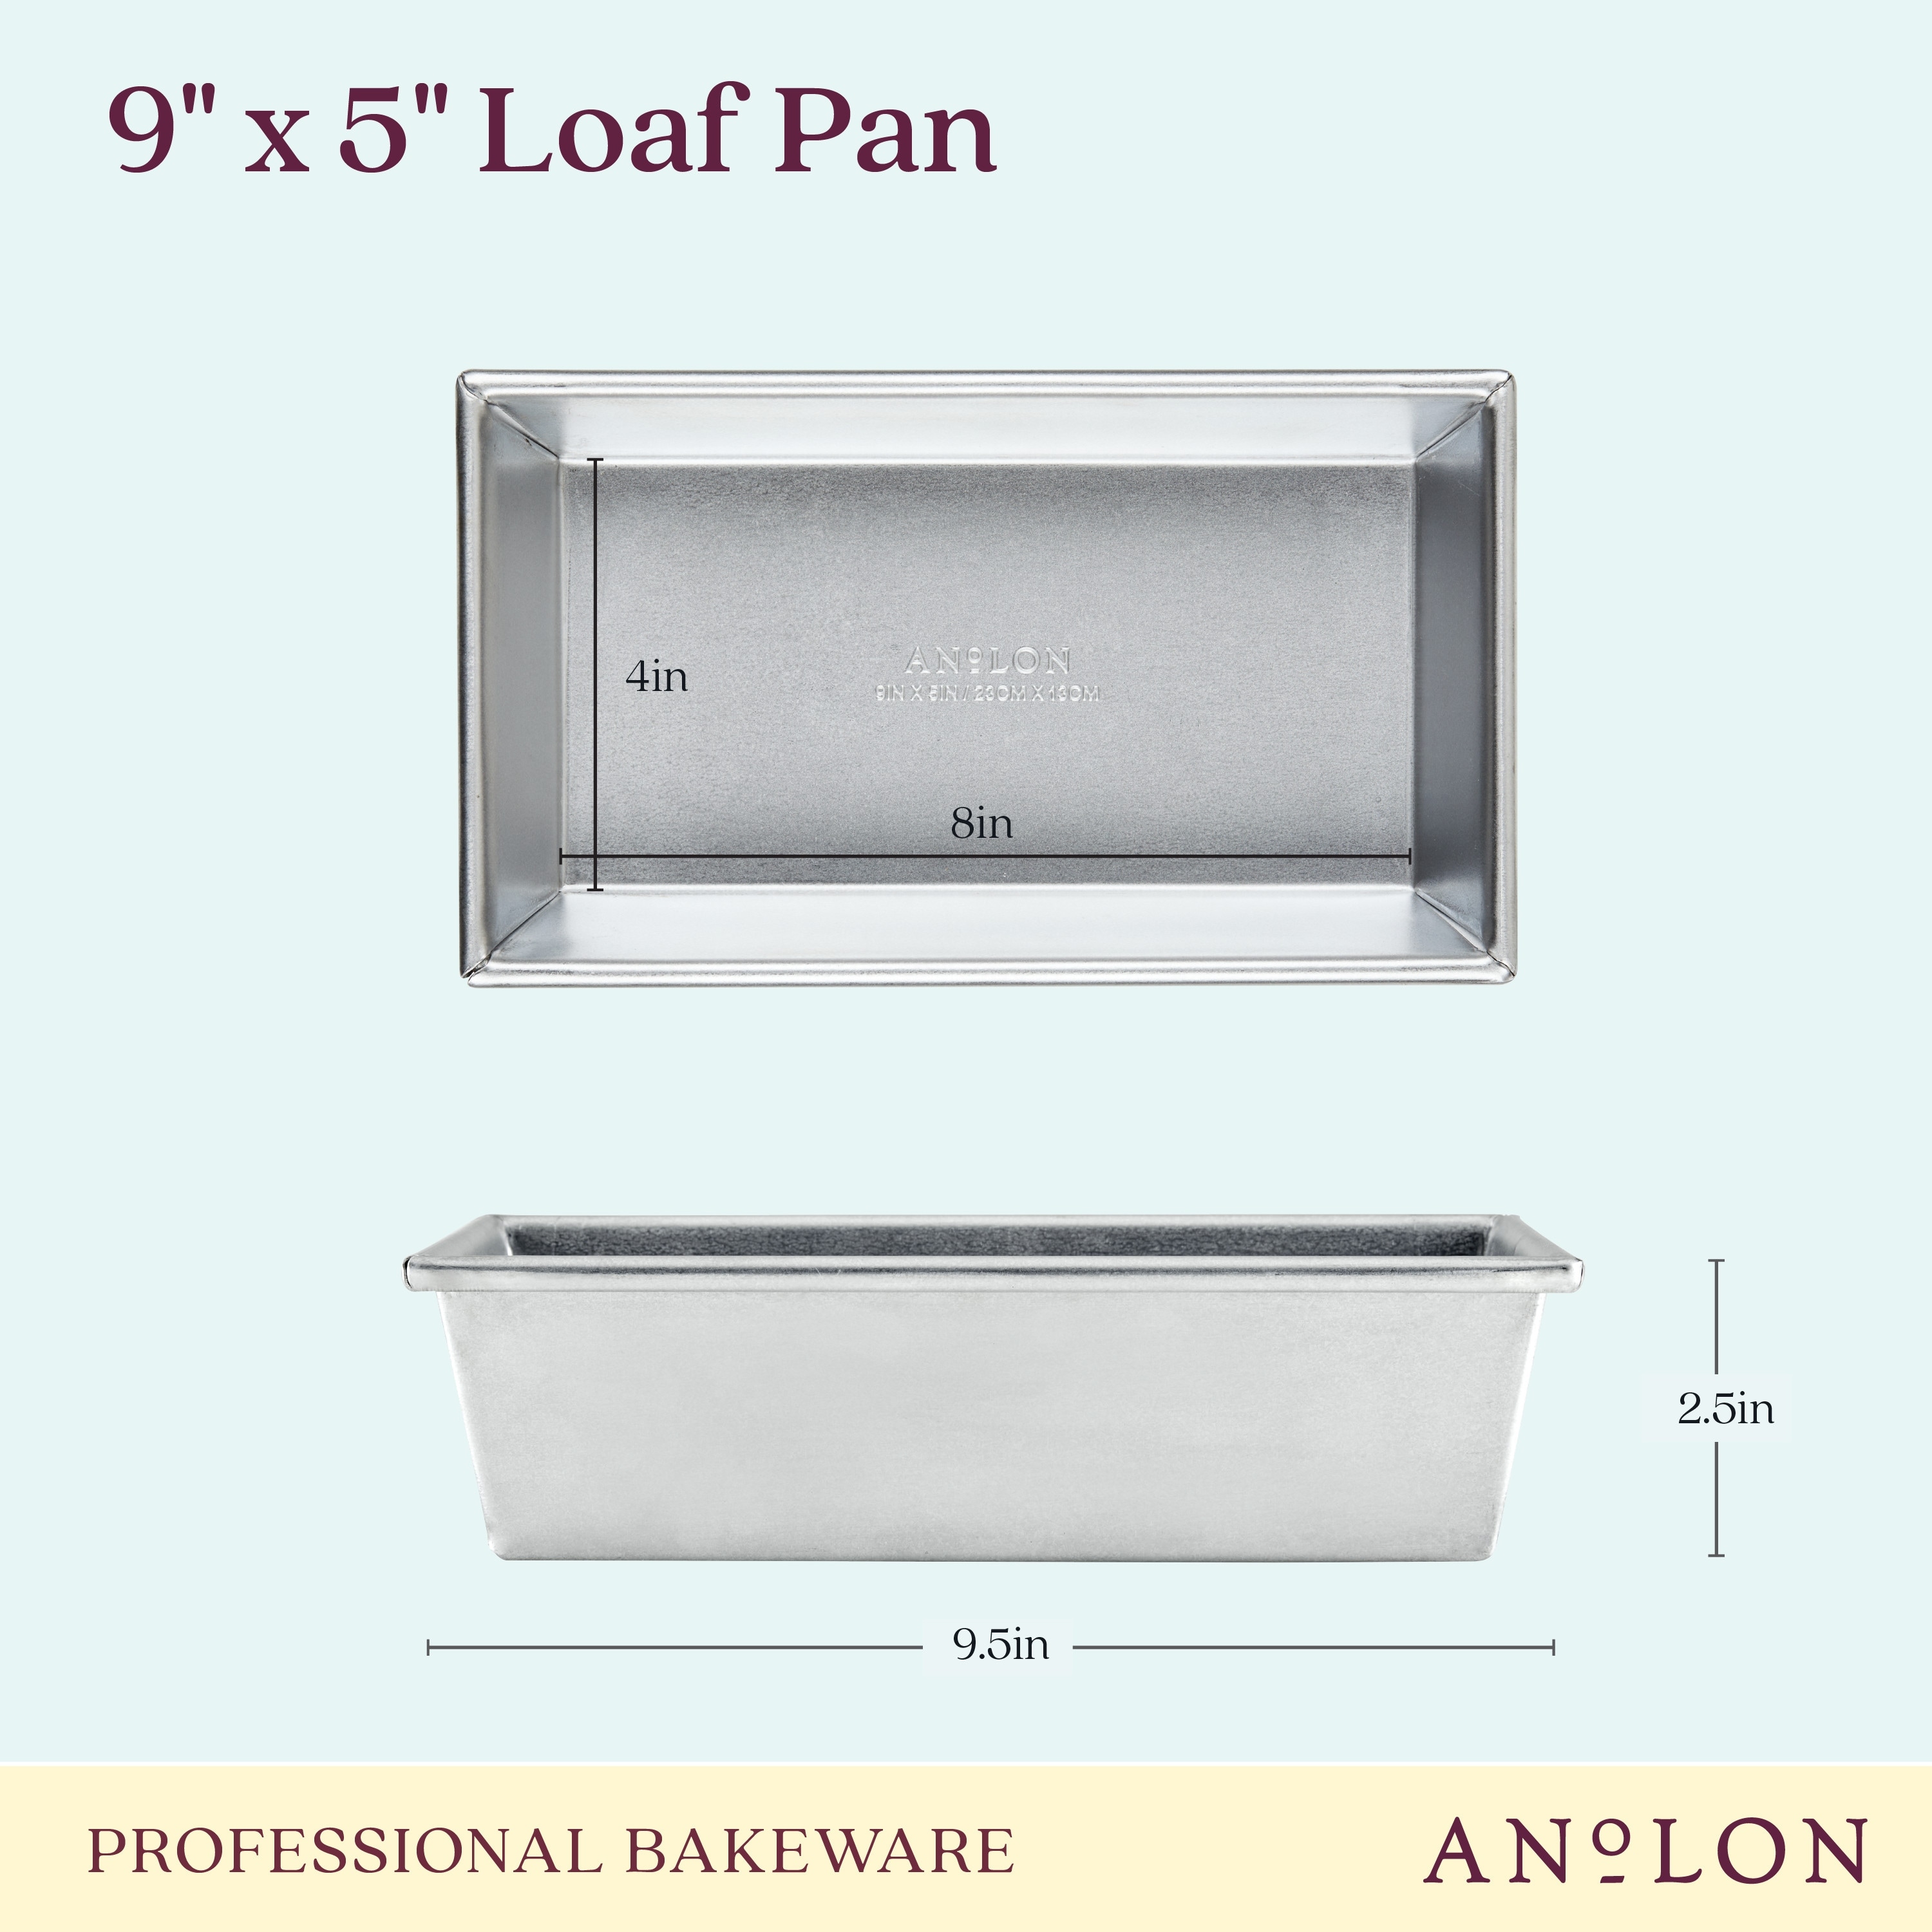  Good Cook Loaf Pan, 9 x 5 Inch, Gray: Loaf Baking Pans